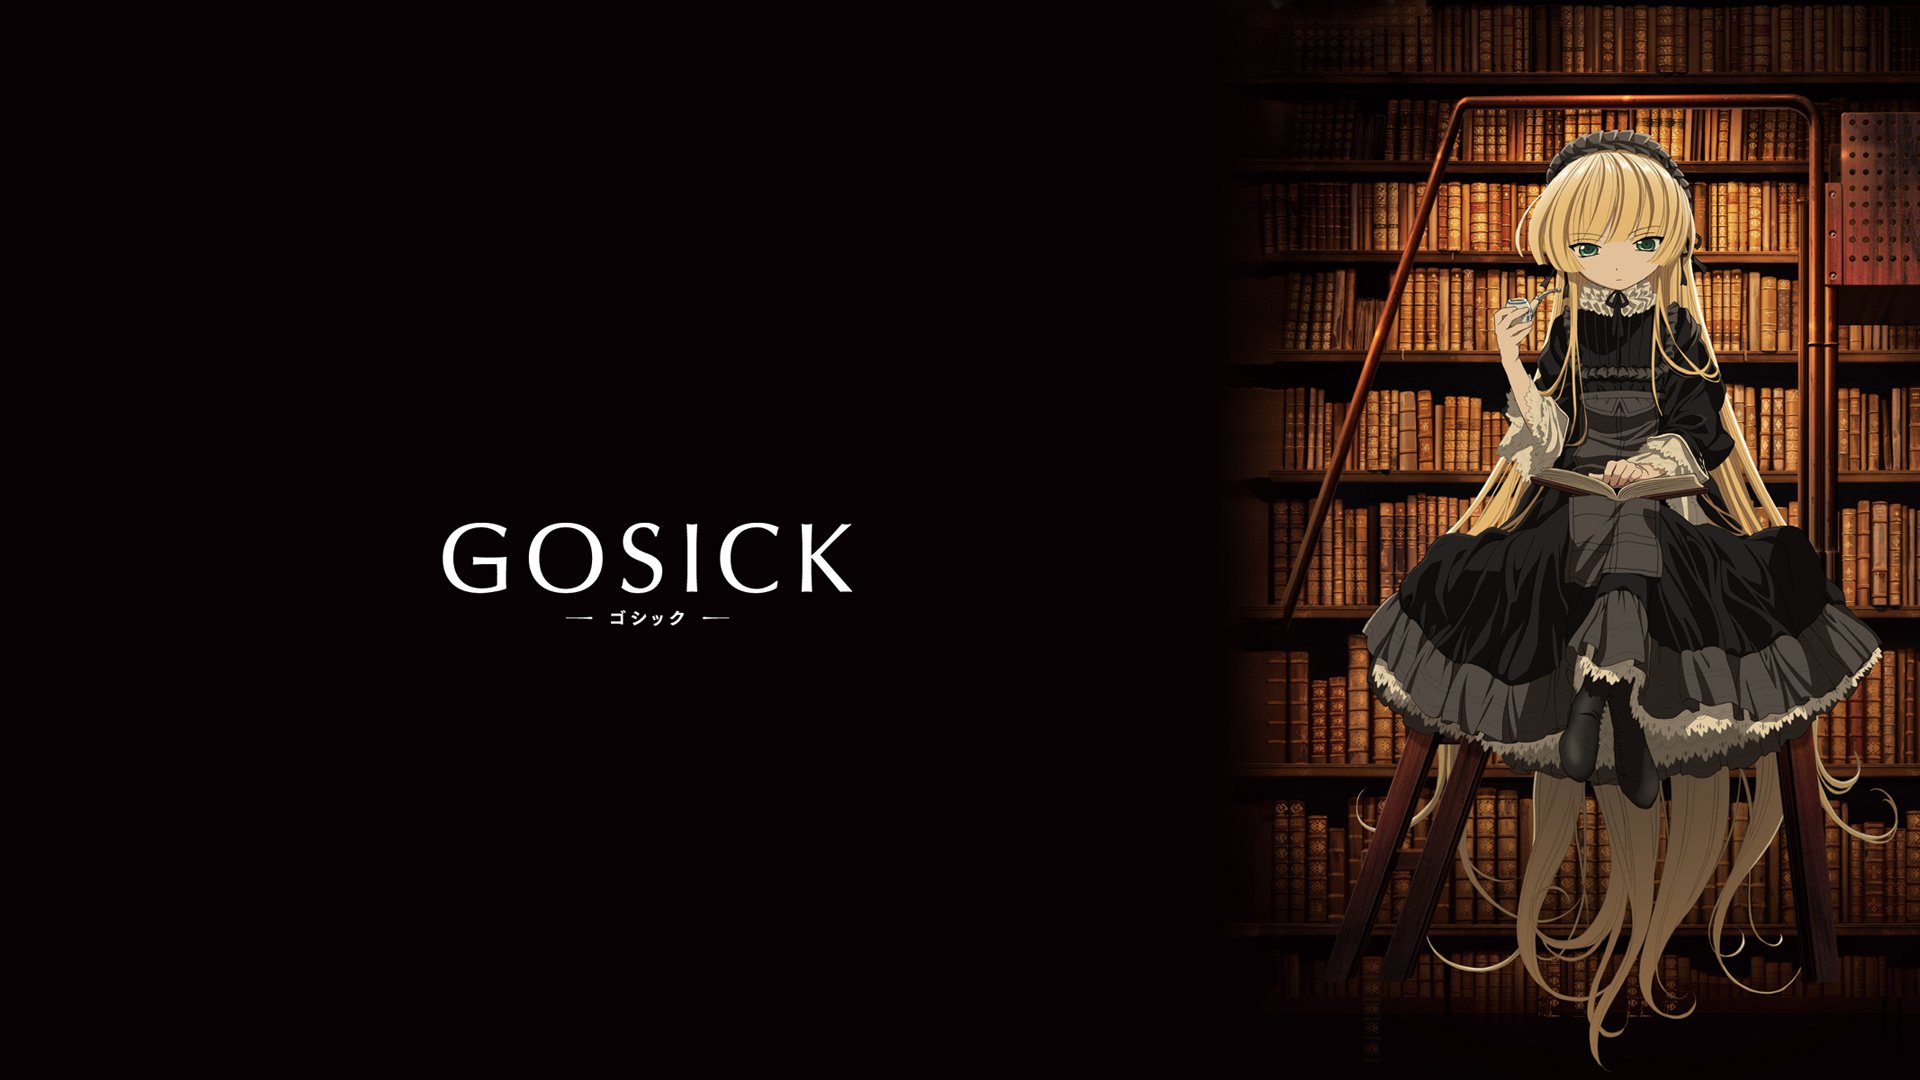 Gosick HD Wallpaper Background Image